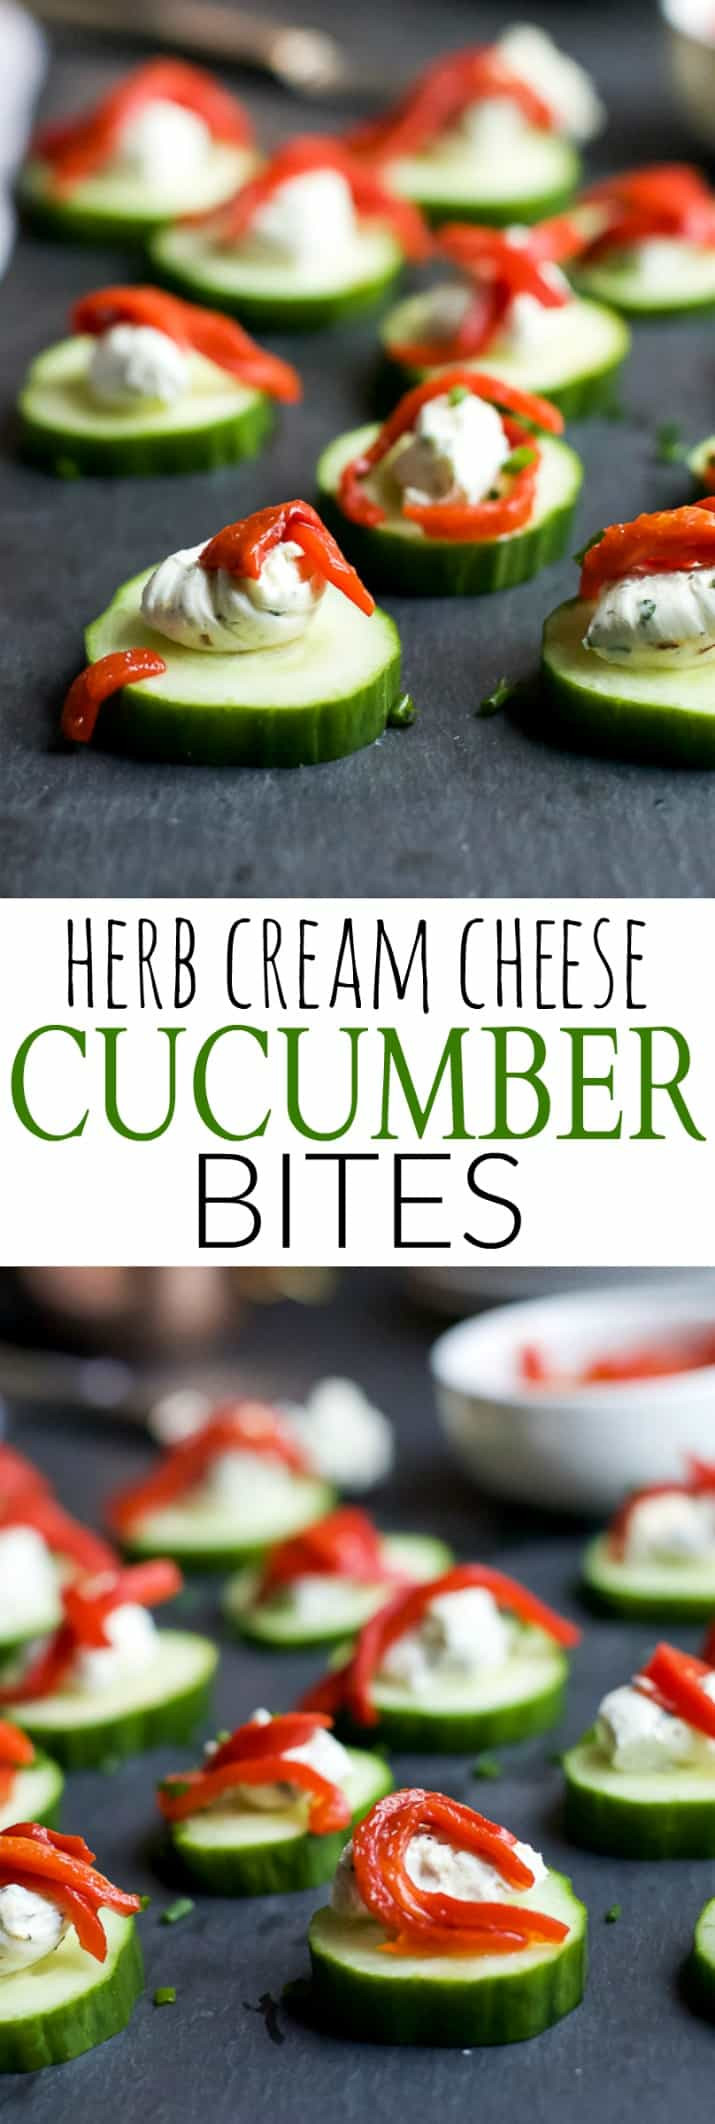 Cucumber Cream Cheese Appetizers
 Herb Cream Cheese Cucumber Bites